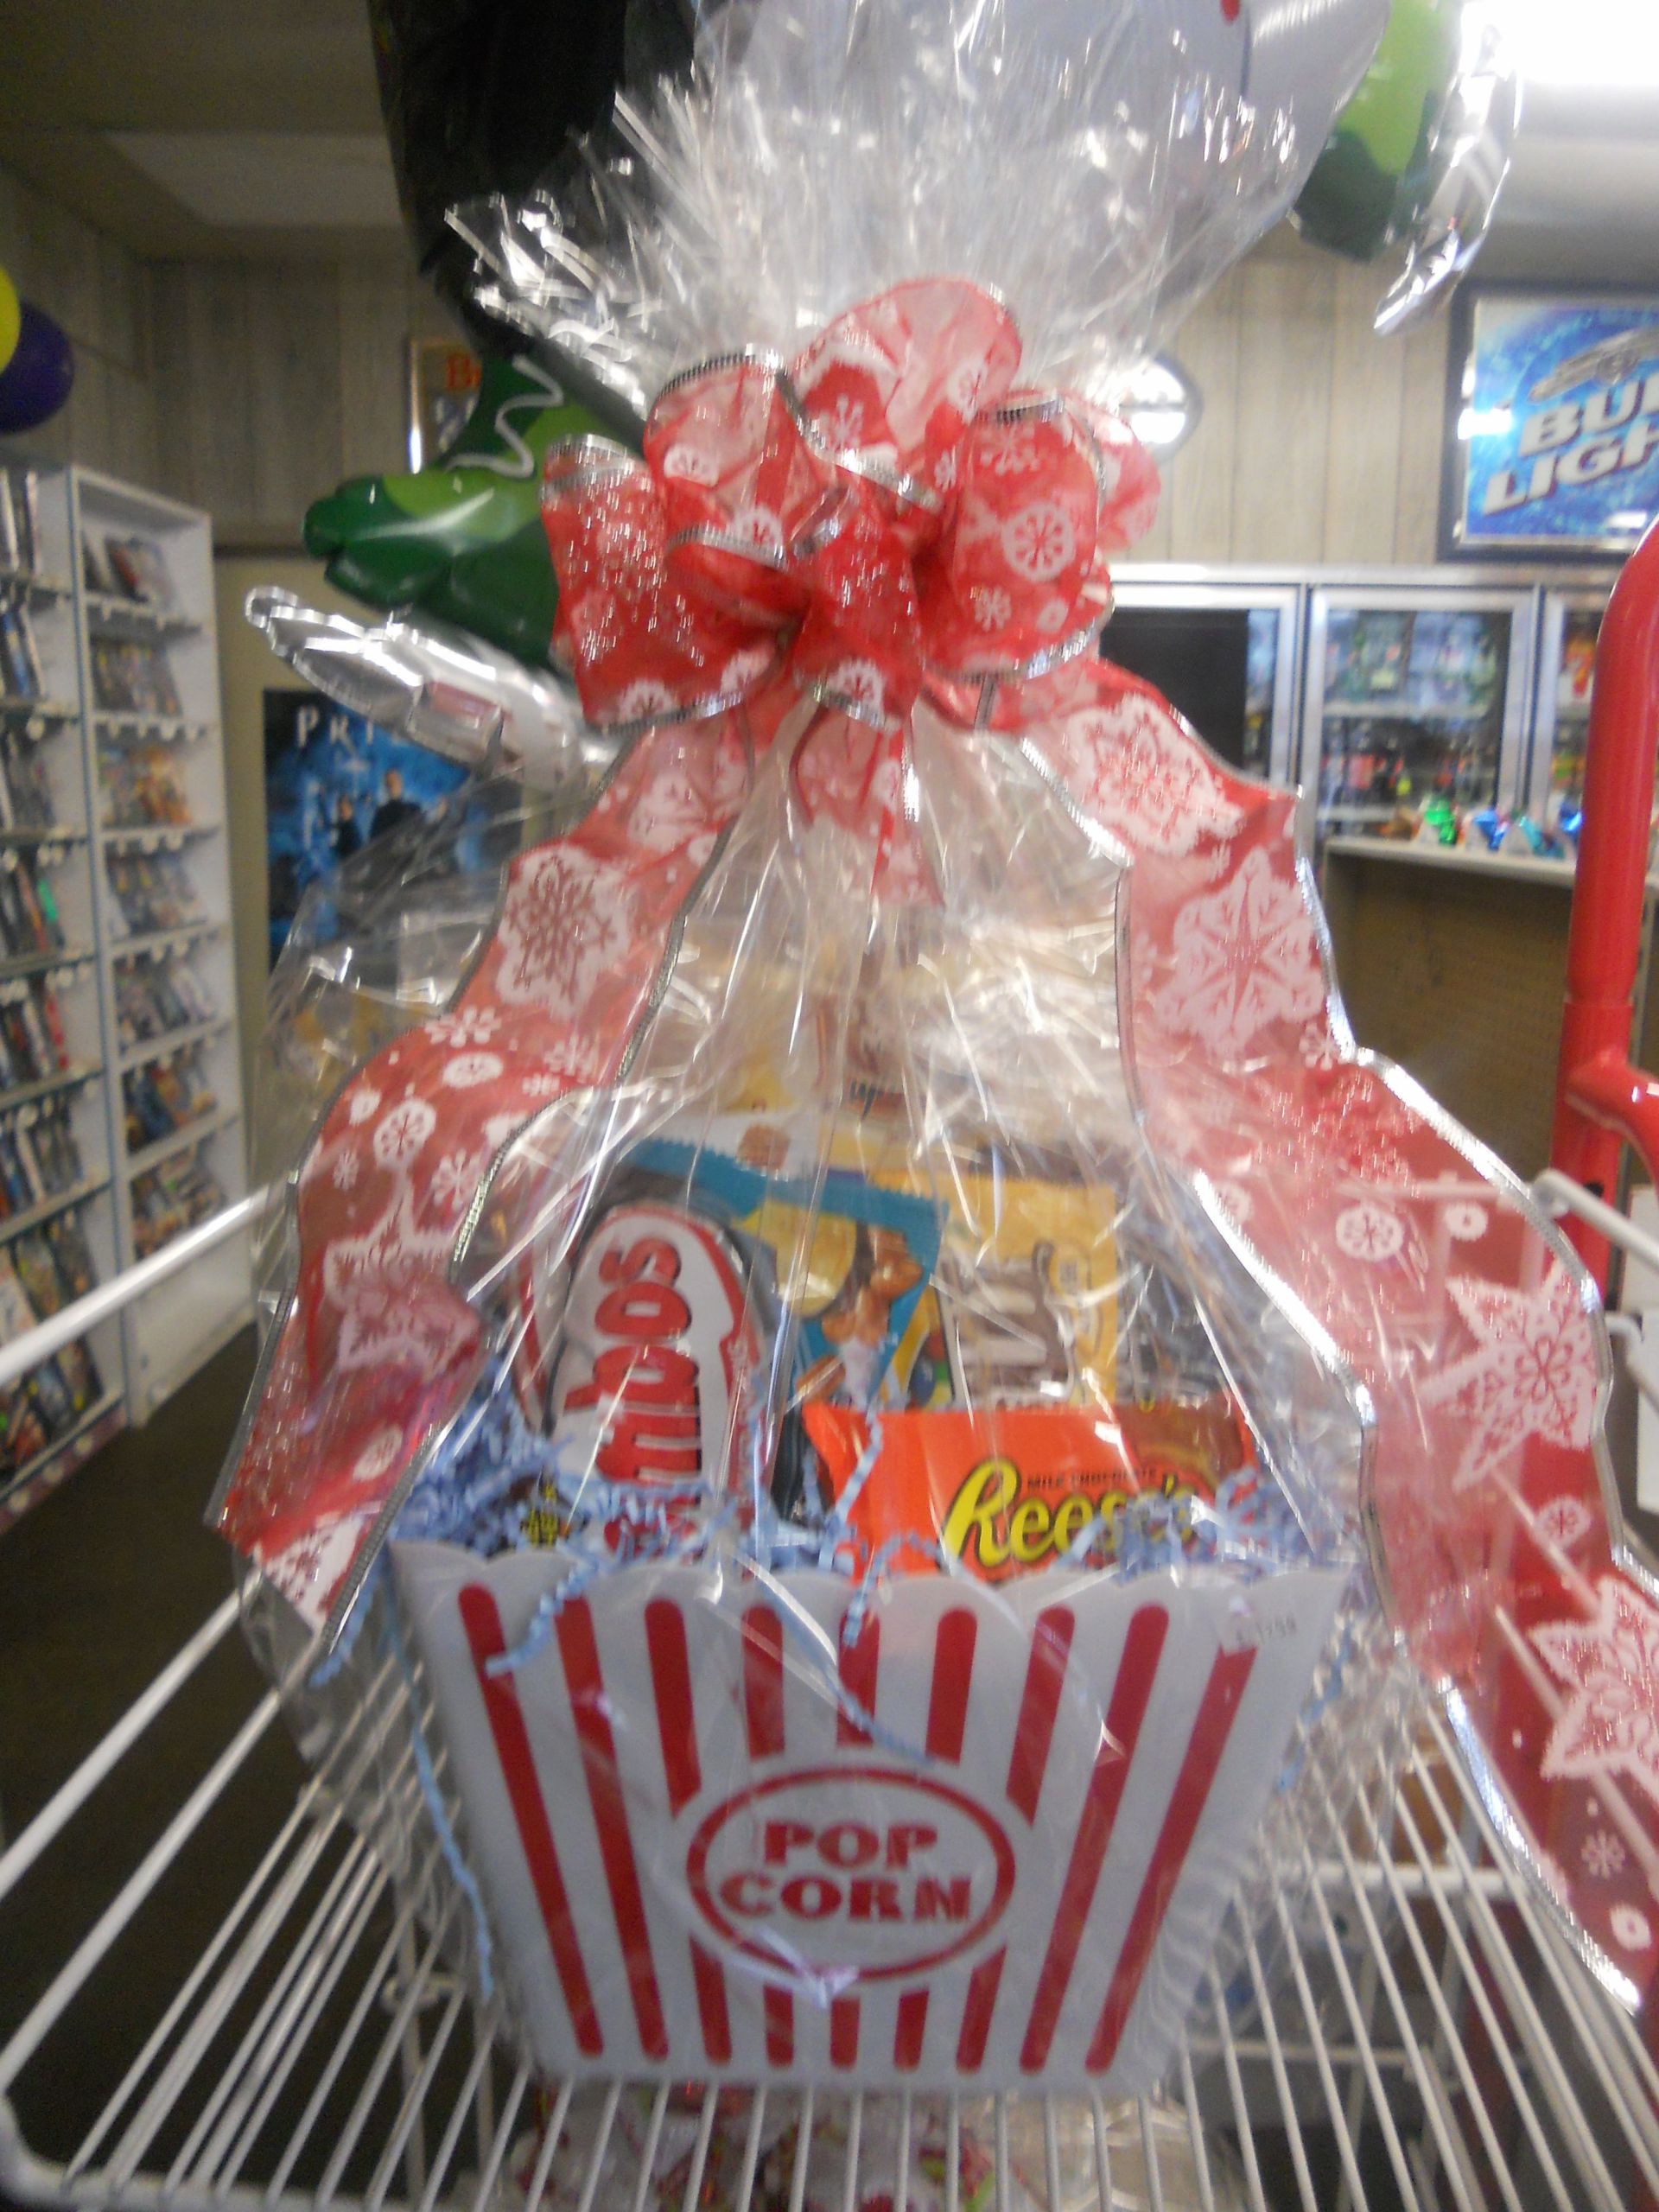 Popcorn Movie Gift Basket Ideas
 Popcorn Gift Basket t ideas